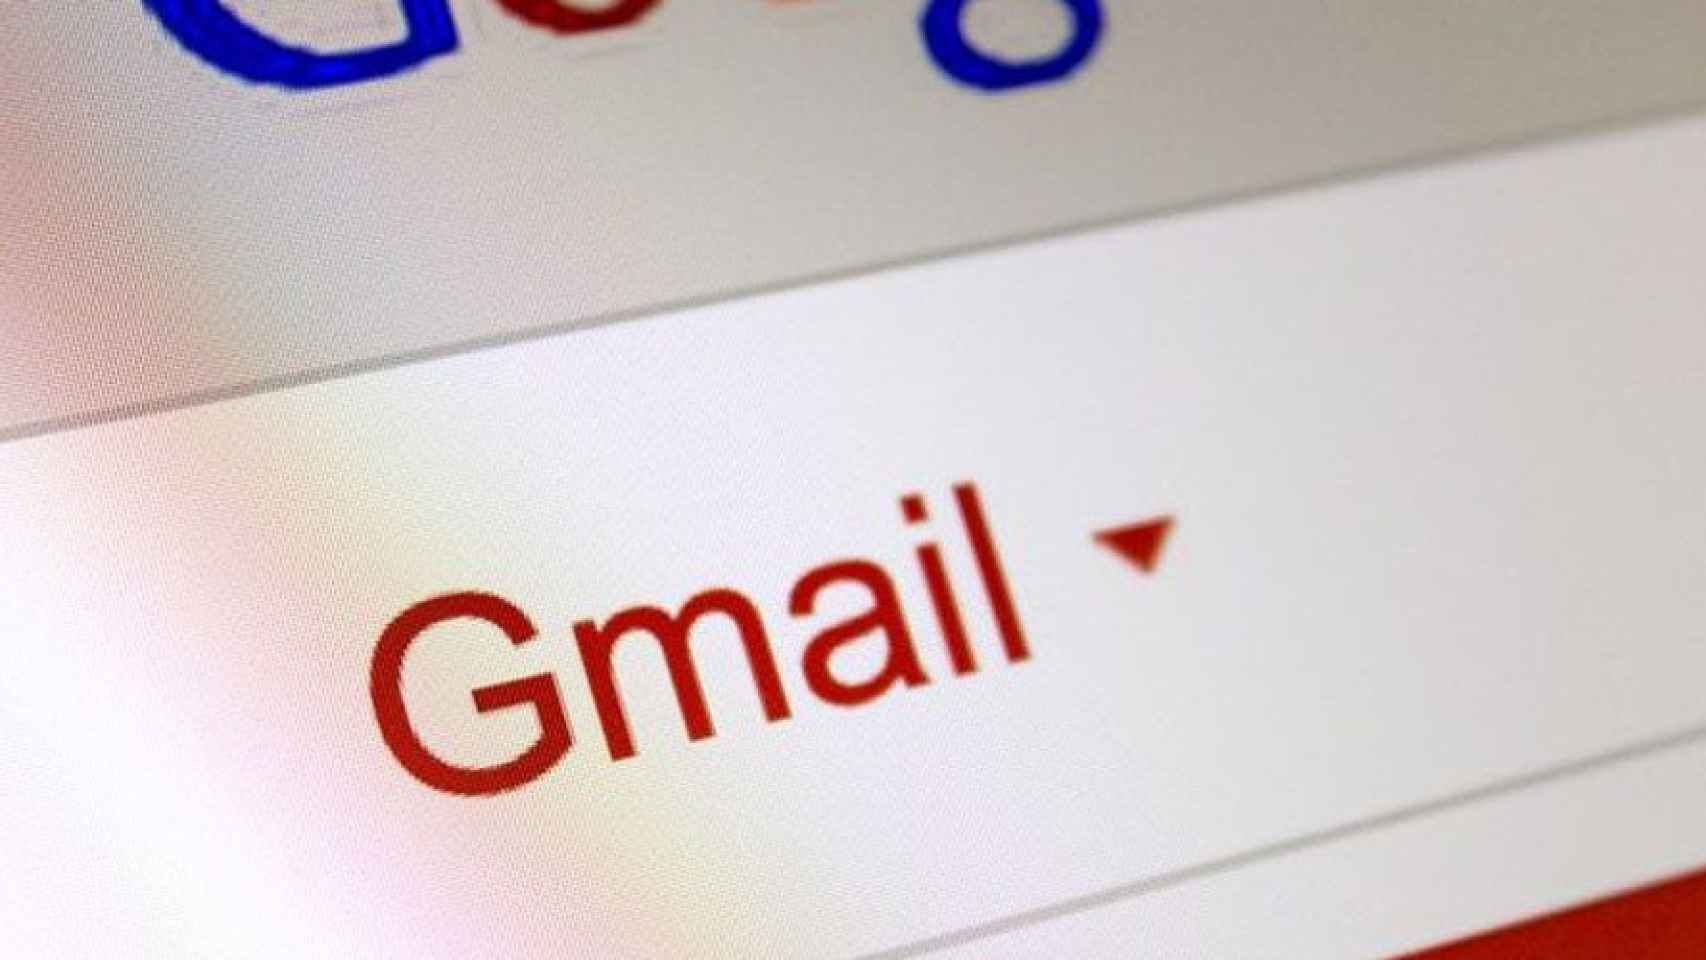 google gmail correo electronico